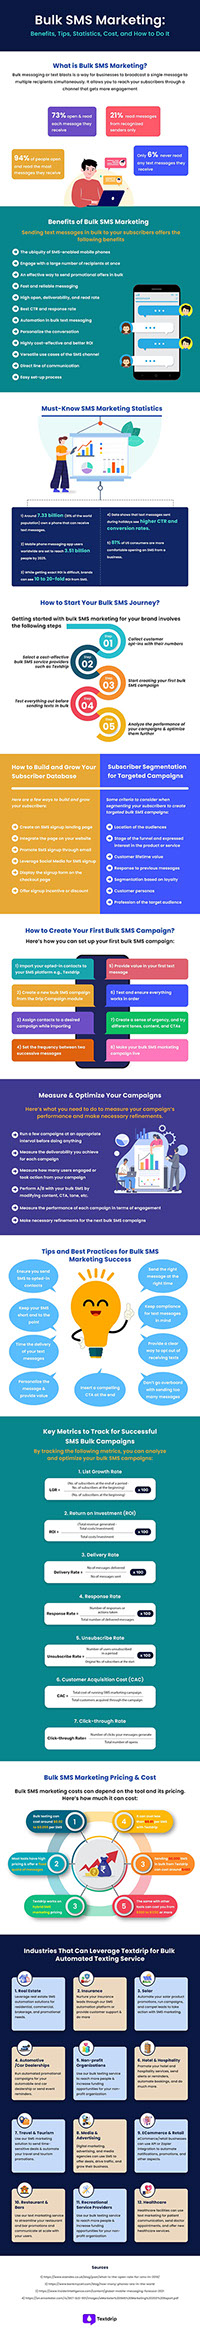 bulk sms marketing infographic guide